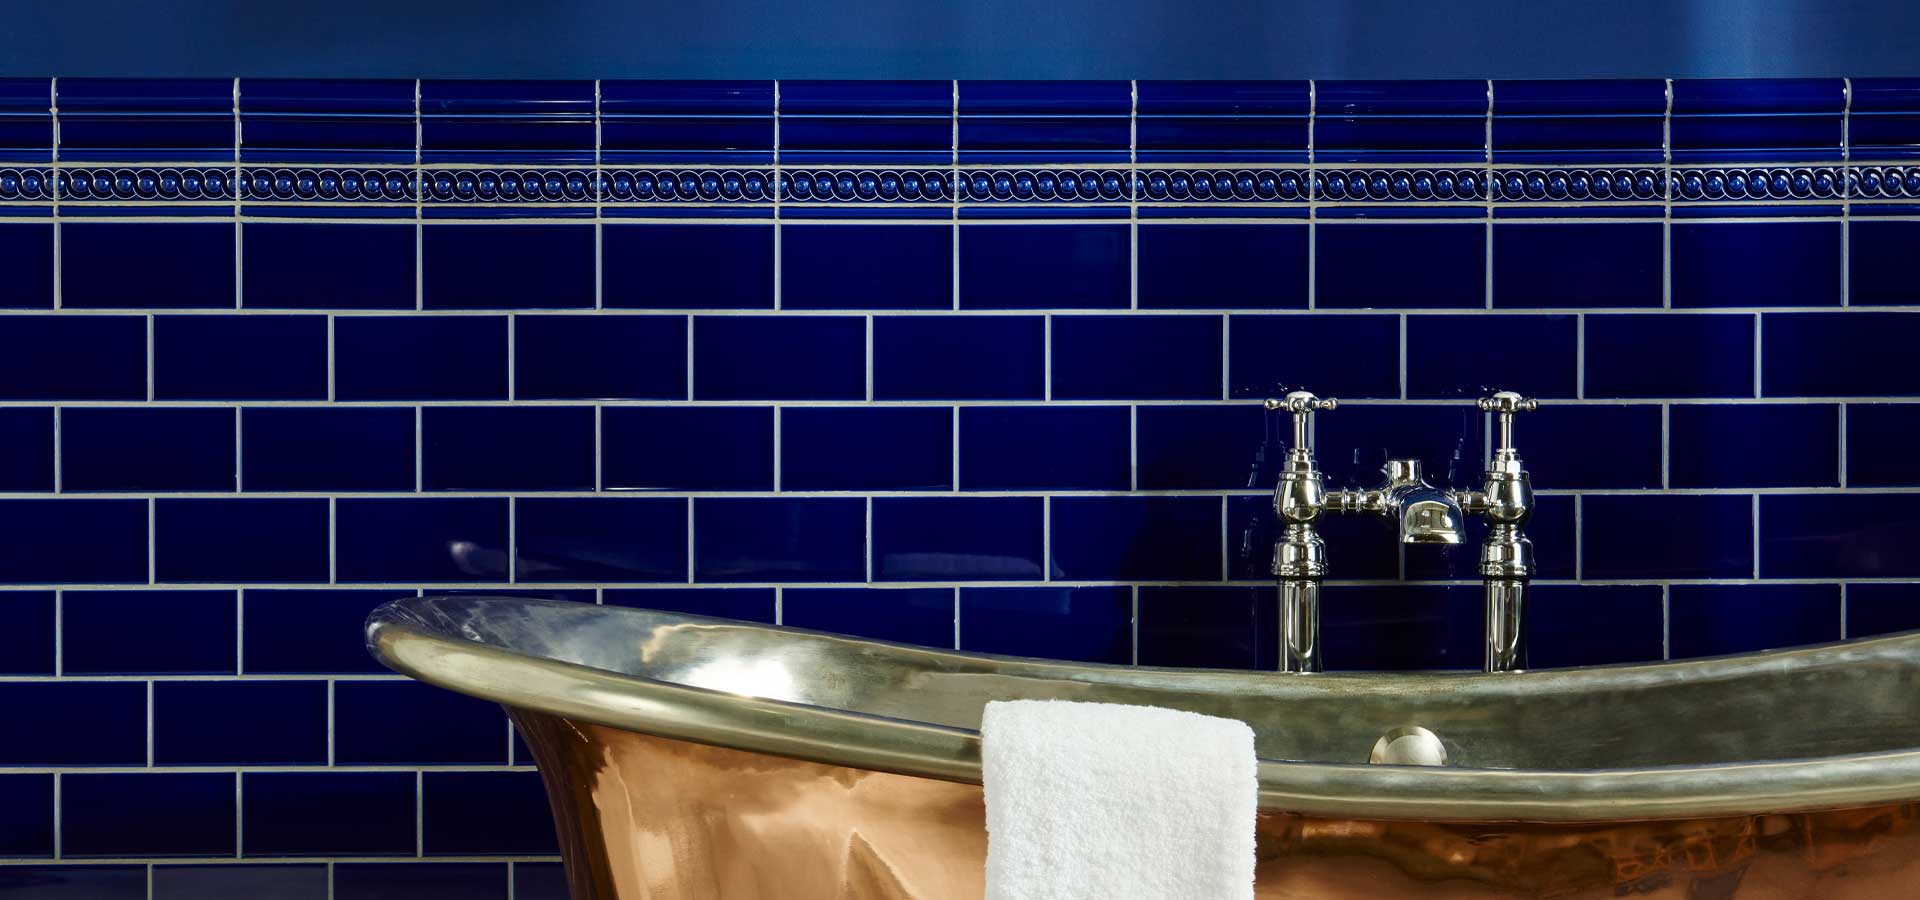 Original Style Artworks Royal Blue (G9901), (G9923), (G9909) & (G9002) shown with Tileworks Floor Tiles Slider